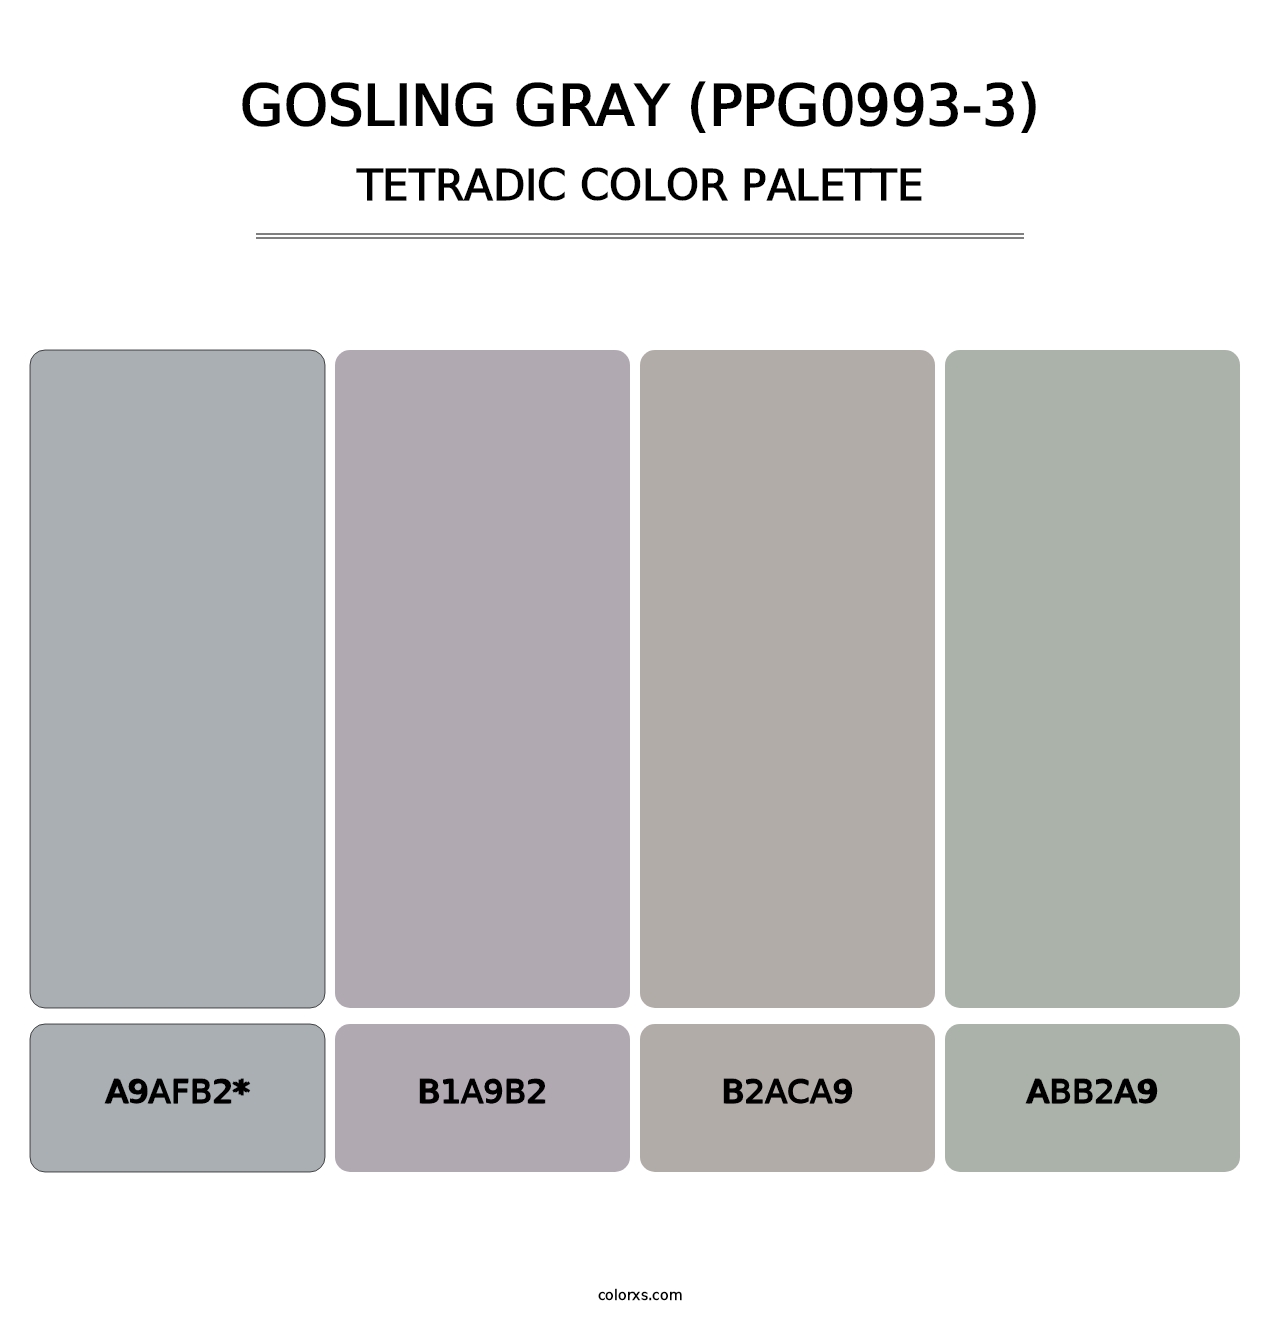 Gosling Gray (PPG0993-3) - Tetradic Color Palette